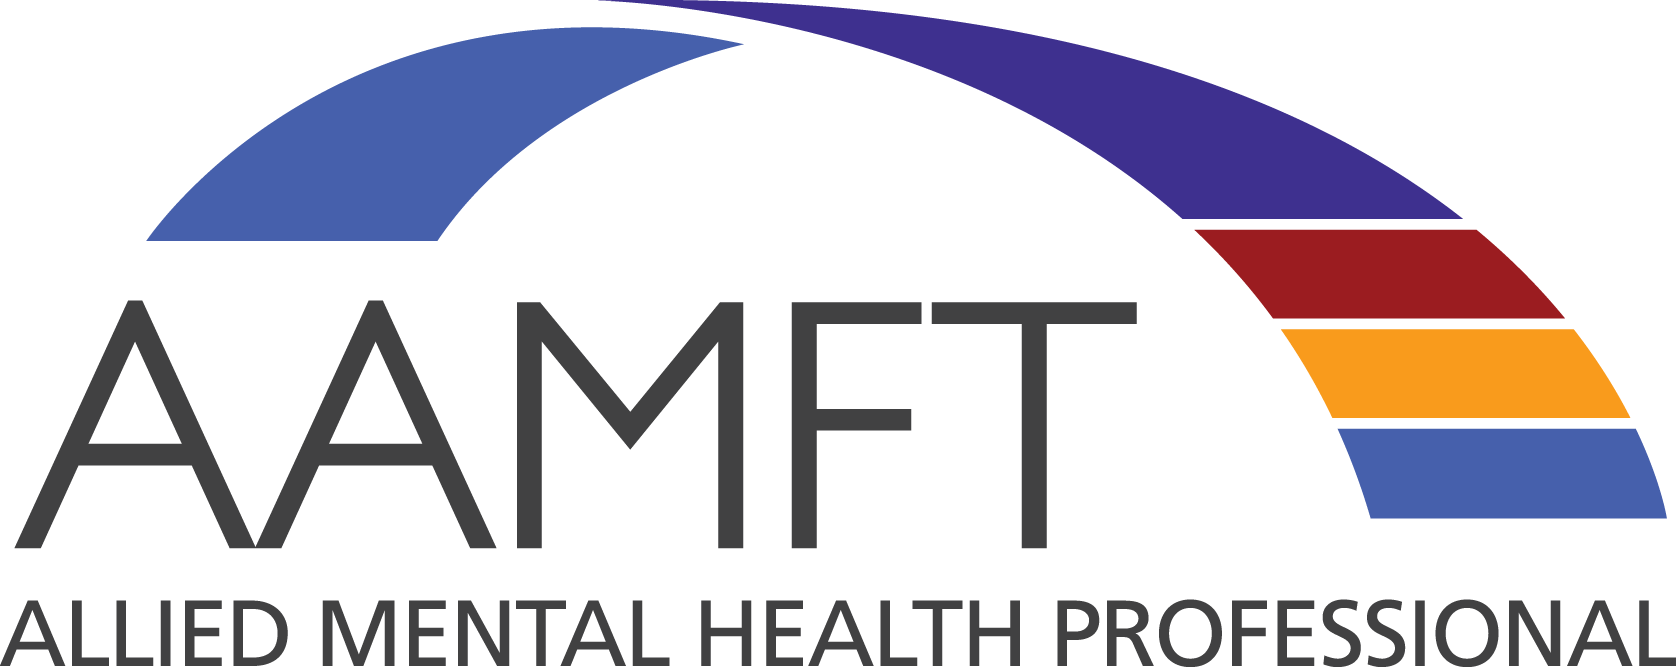 AAMFT Allied Mental Health Professional